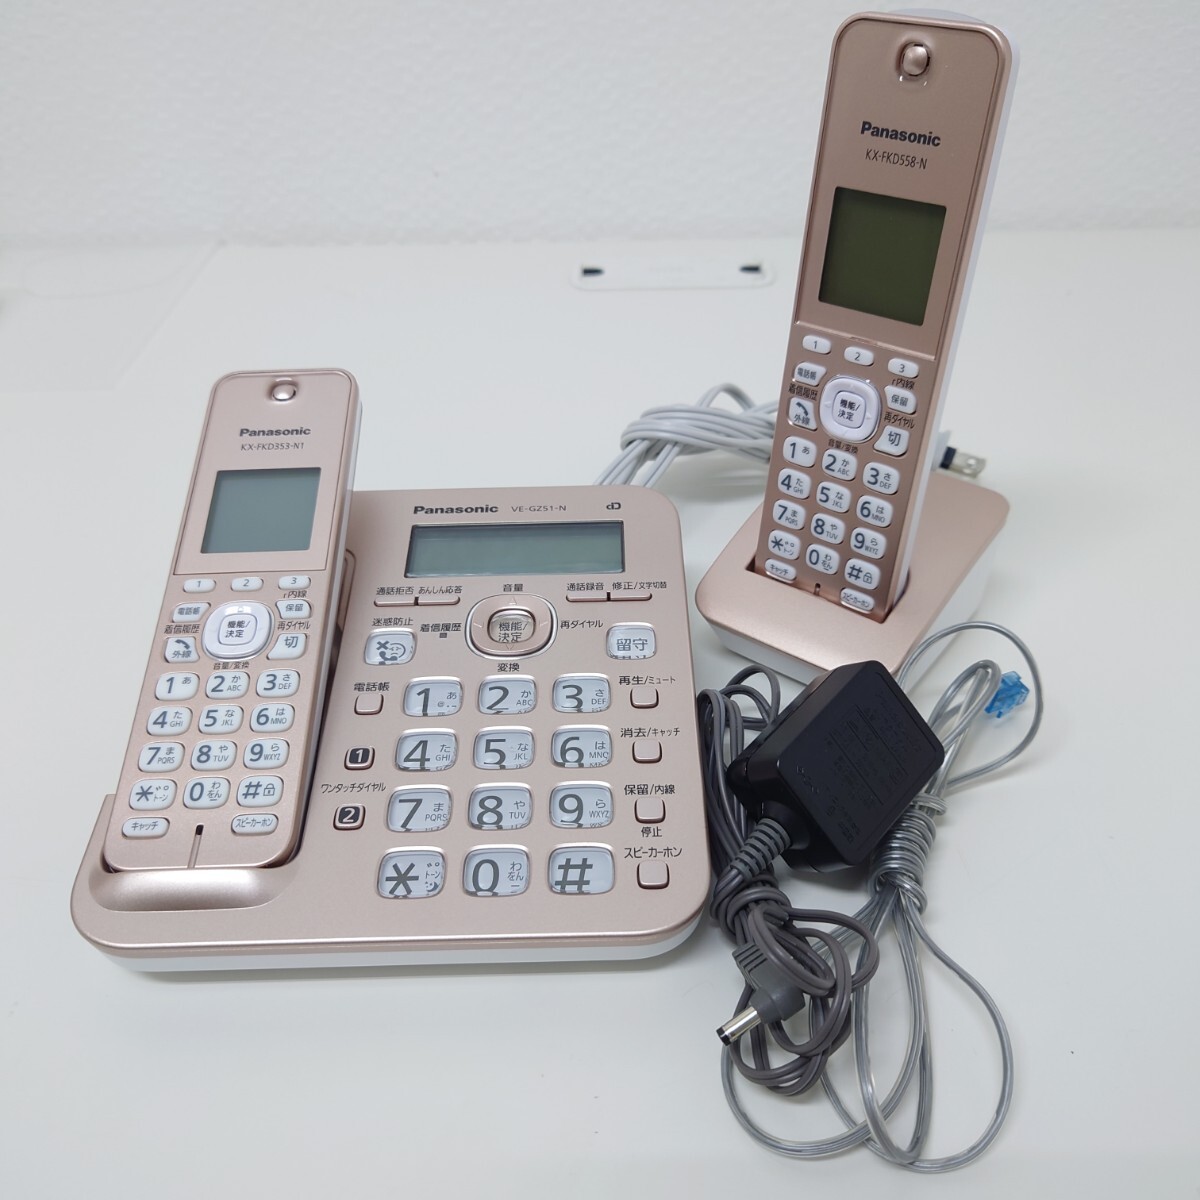 UU250 beautiful goods Panasonic Panasonic cordless telephone machine RU*RU*RUru*ru*ruVE-GZ51-N pink gold BARR